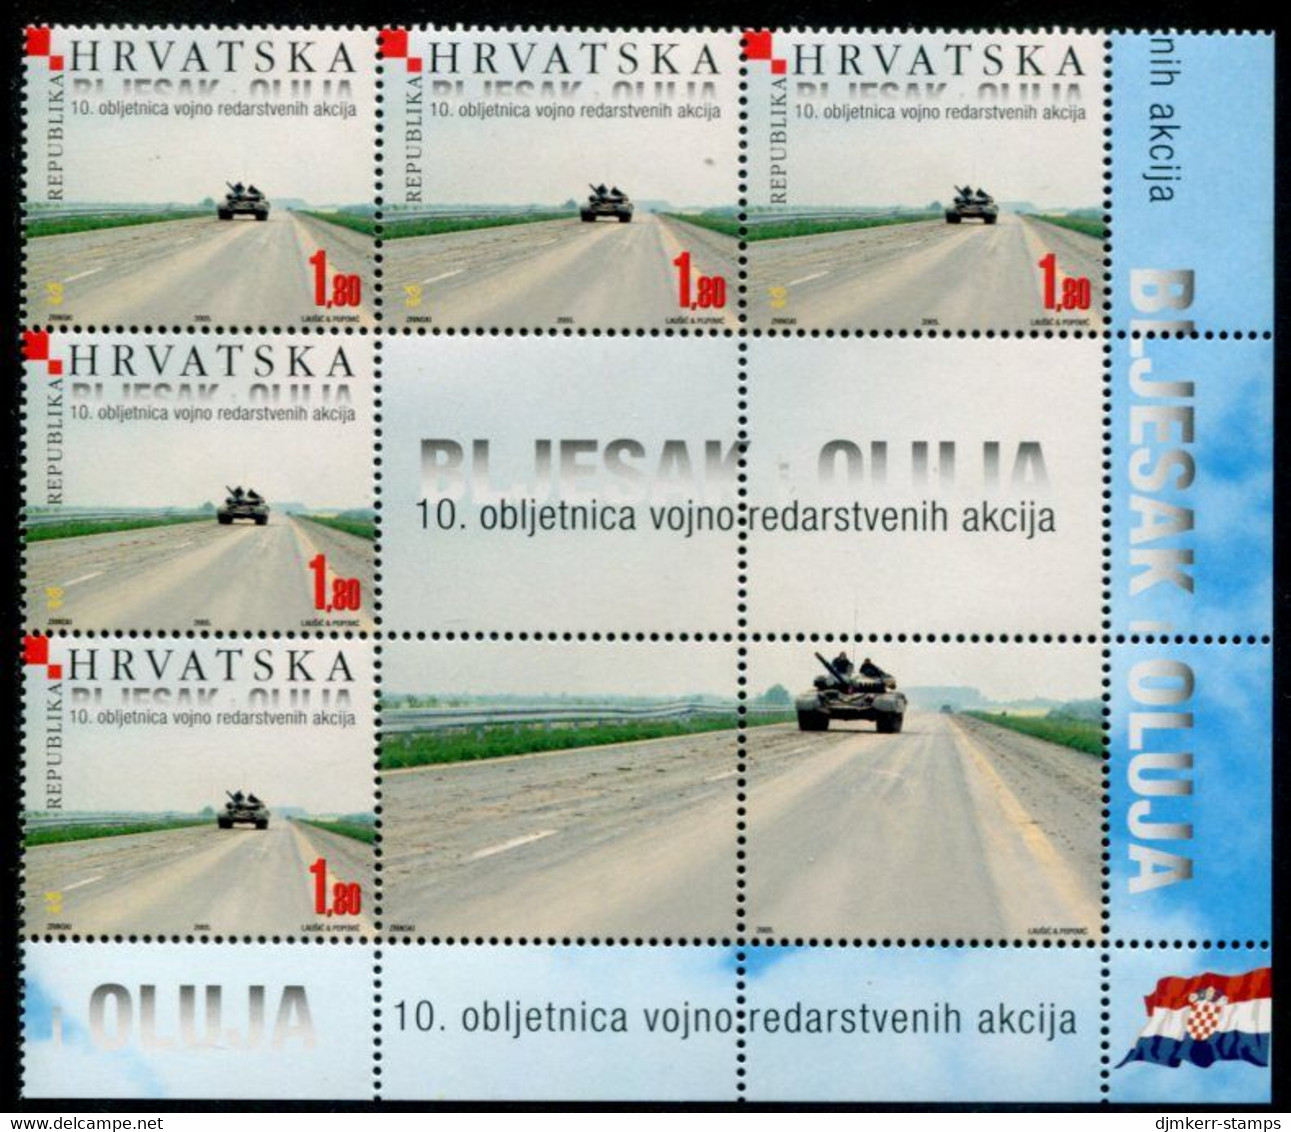 CROATIA 2005 10th Anniversary Of Military Campaigns Block Of 5 + Labels MNH / **.  Michel 716 - Croatia